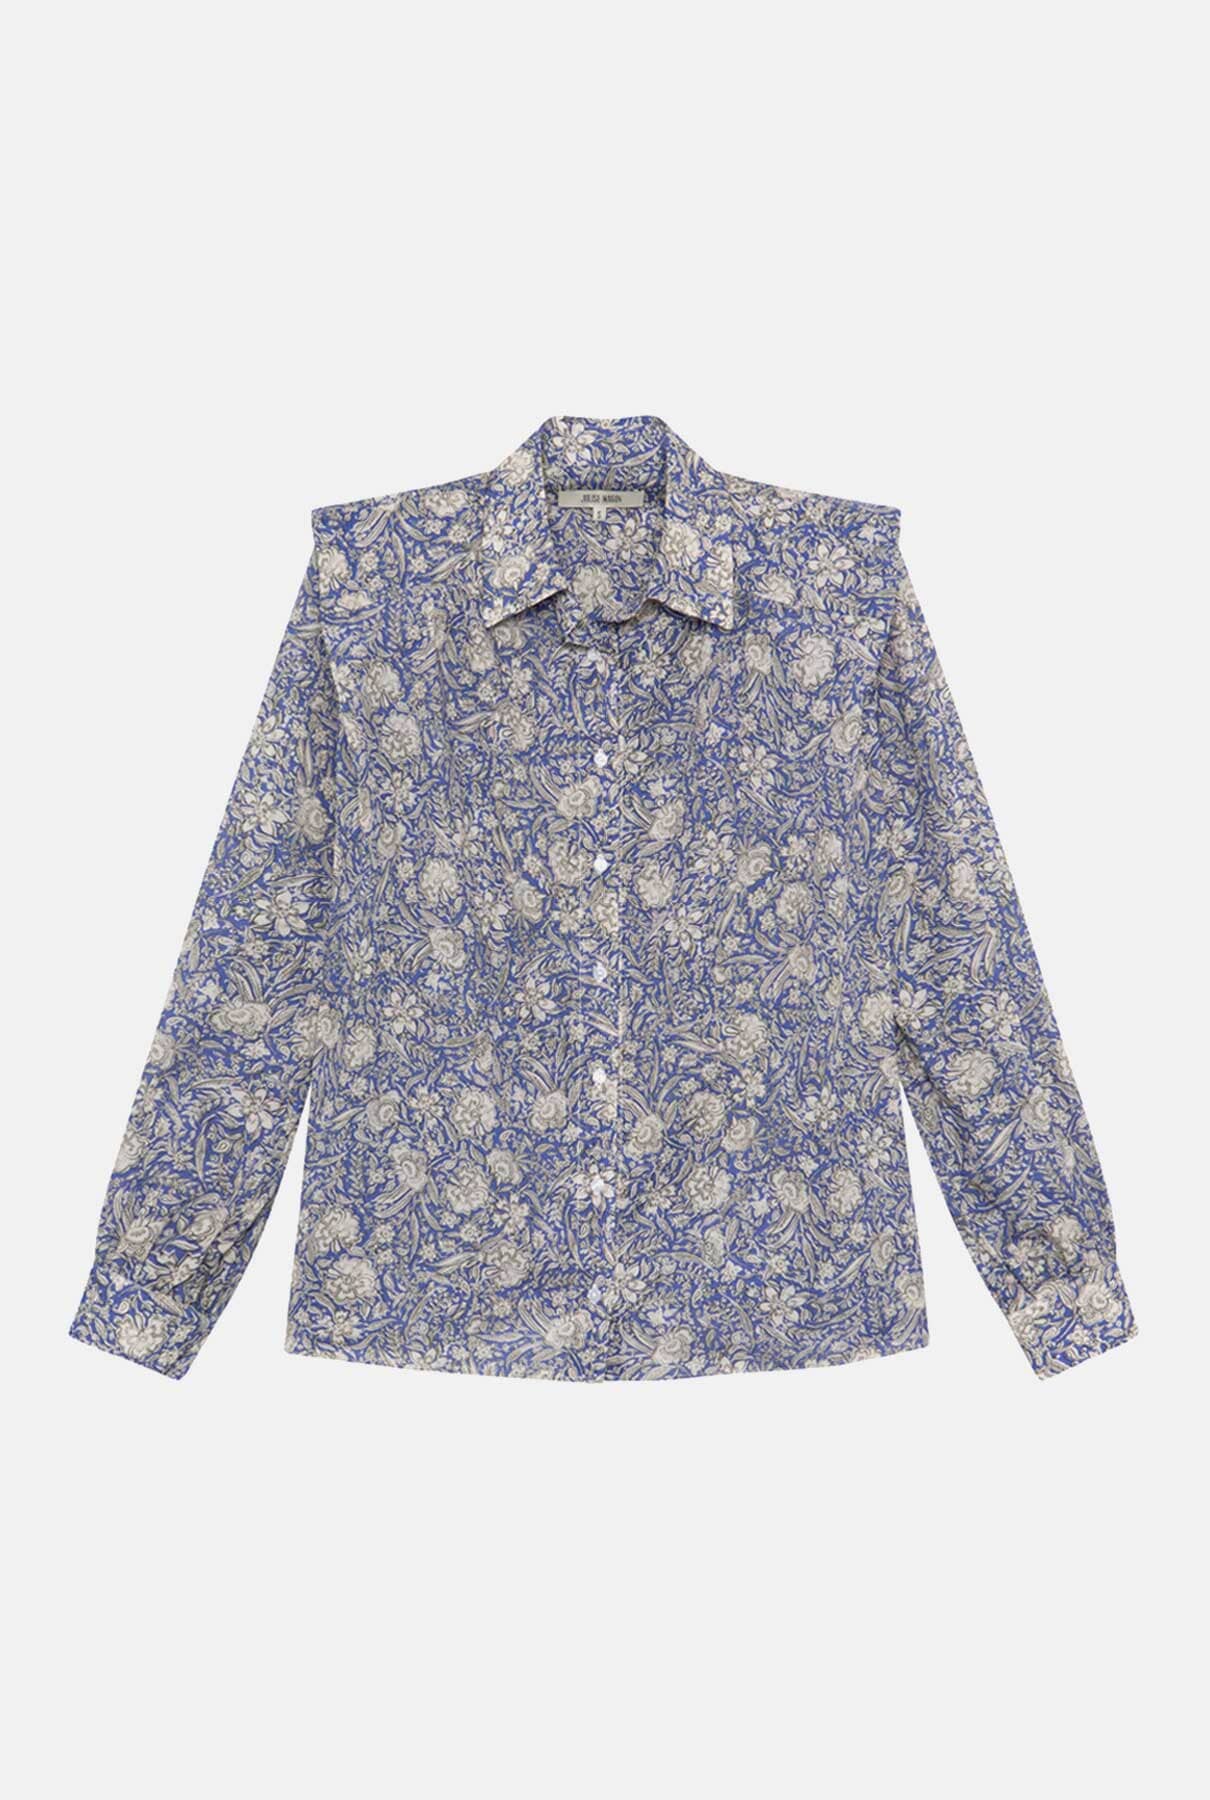 Marieta Blue Flowers Shirts & blouses Julise Magon 